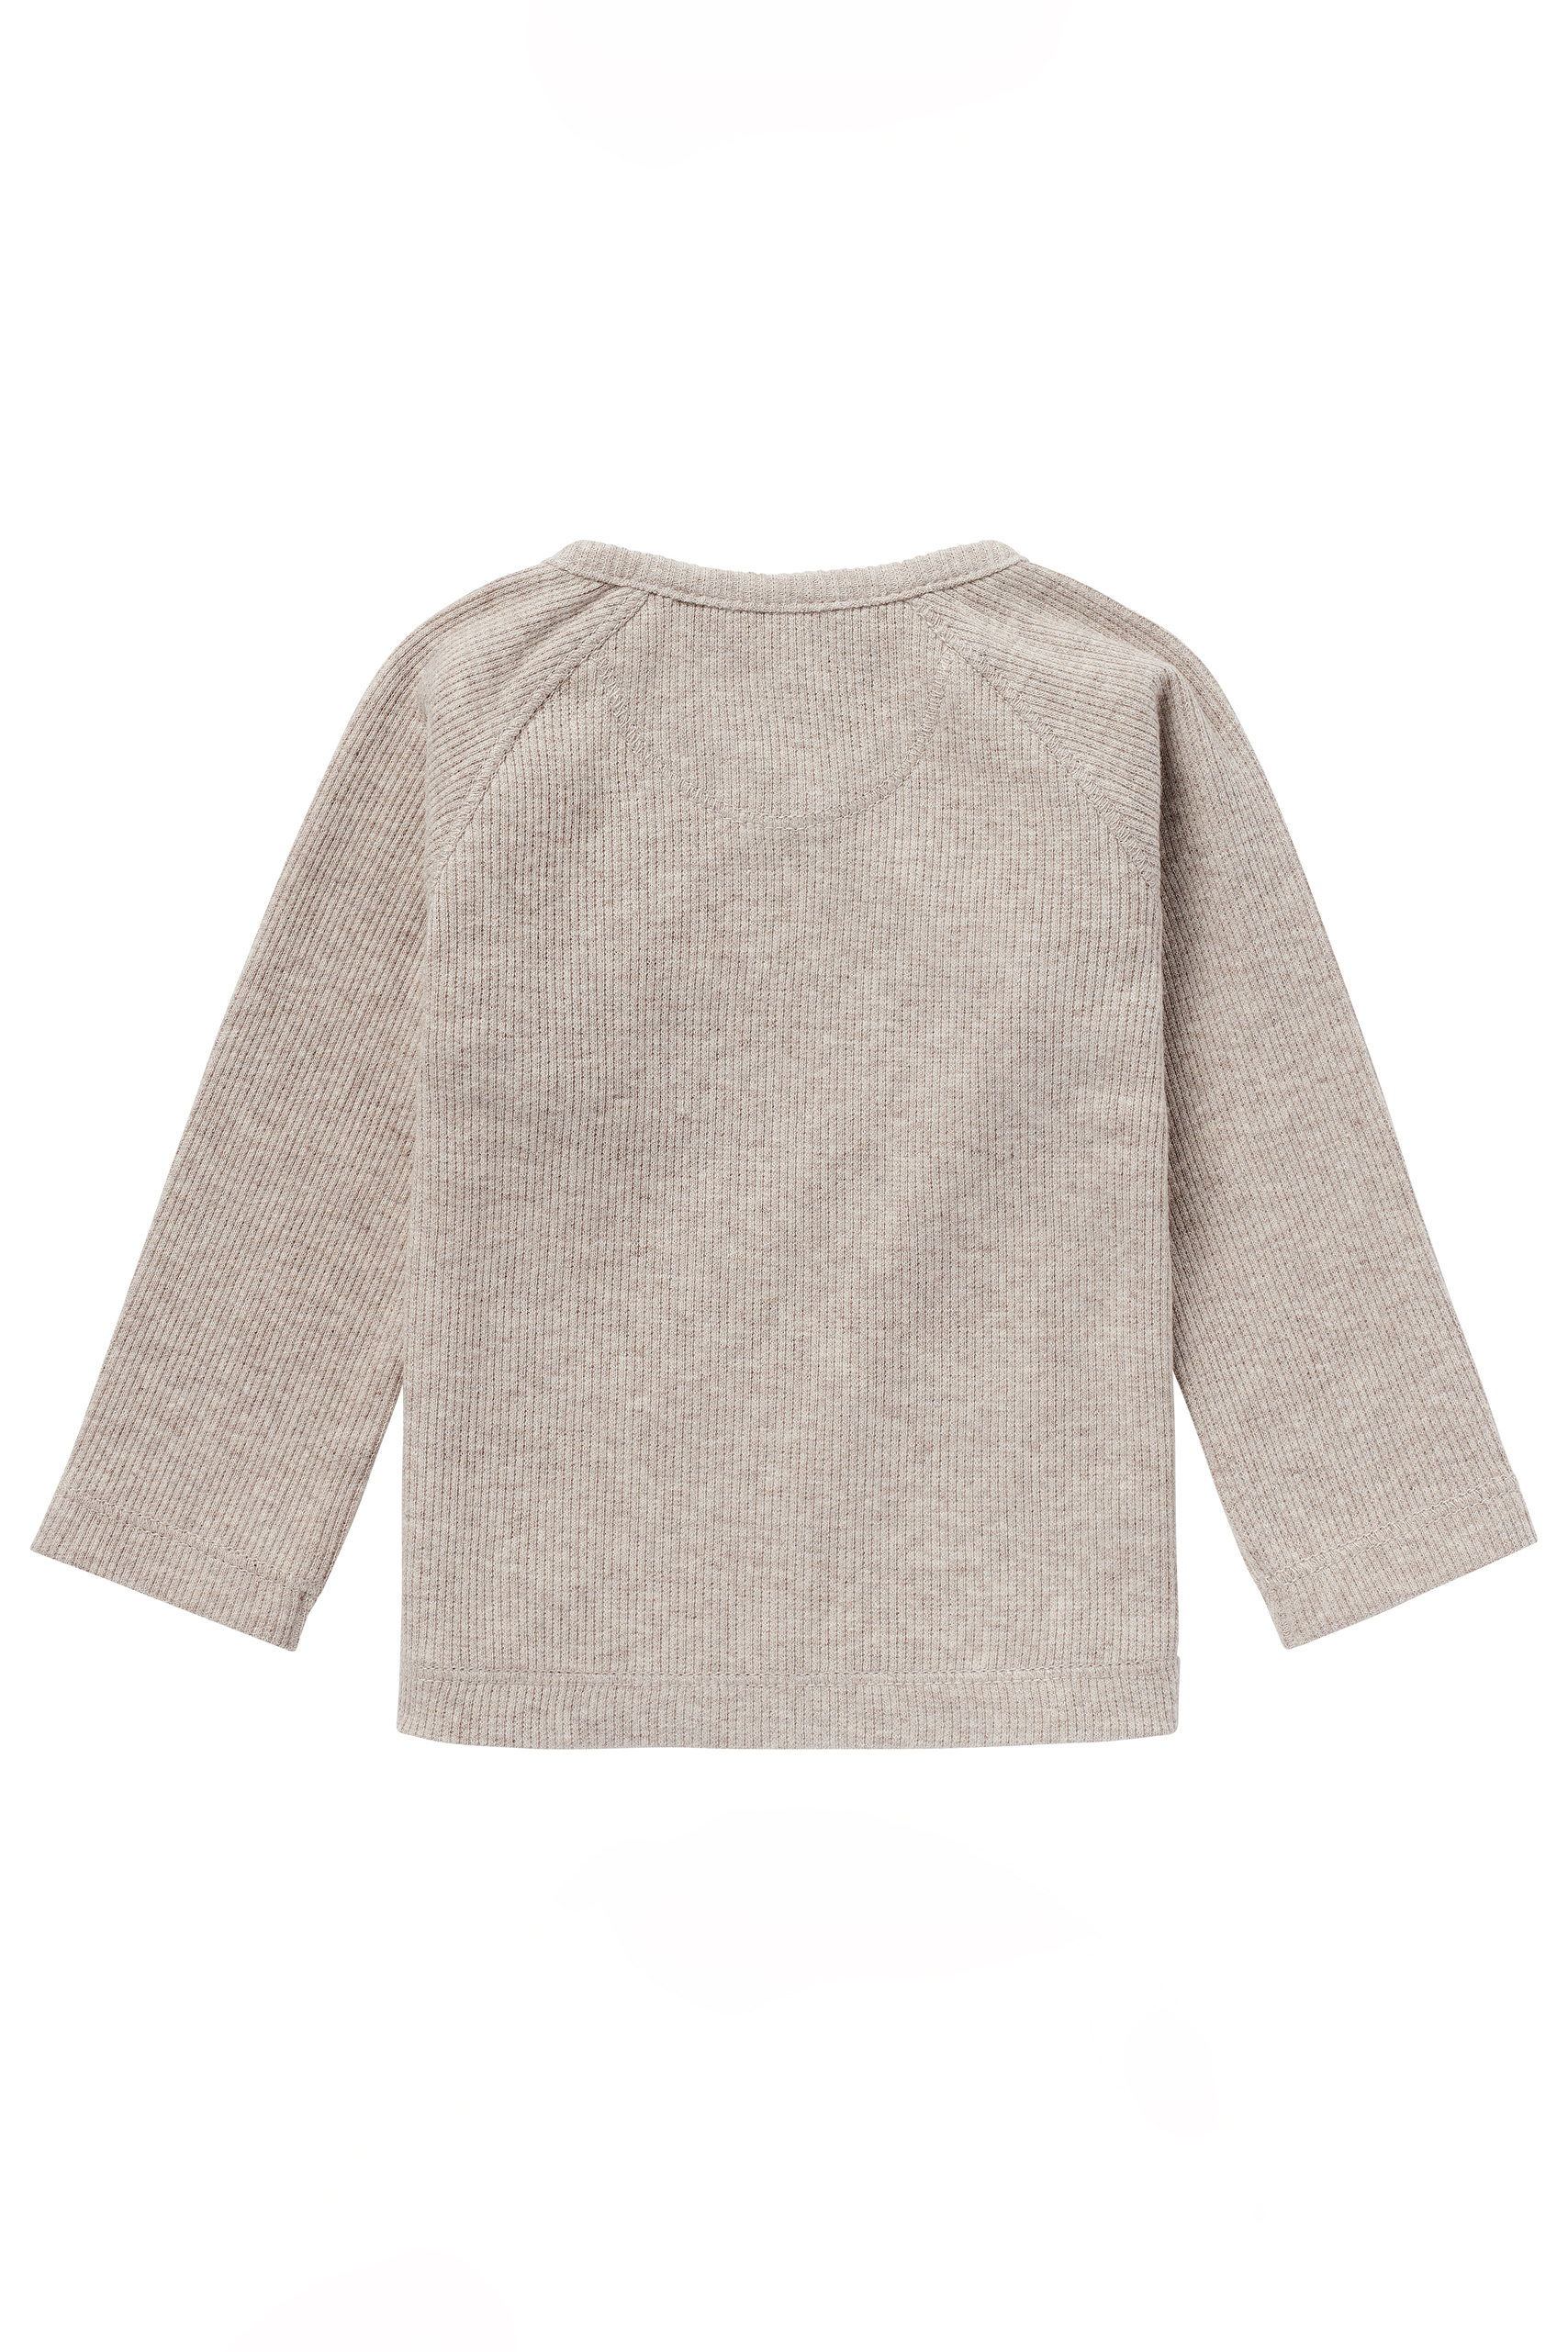 Baby taupe Mamarella | Wrap order online Shirt